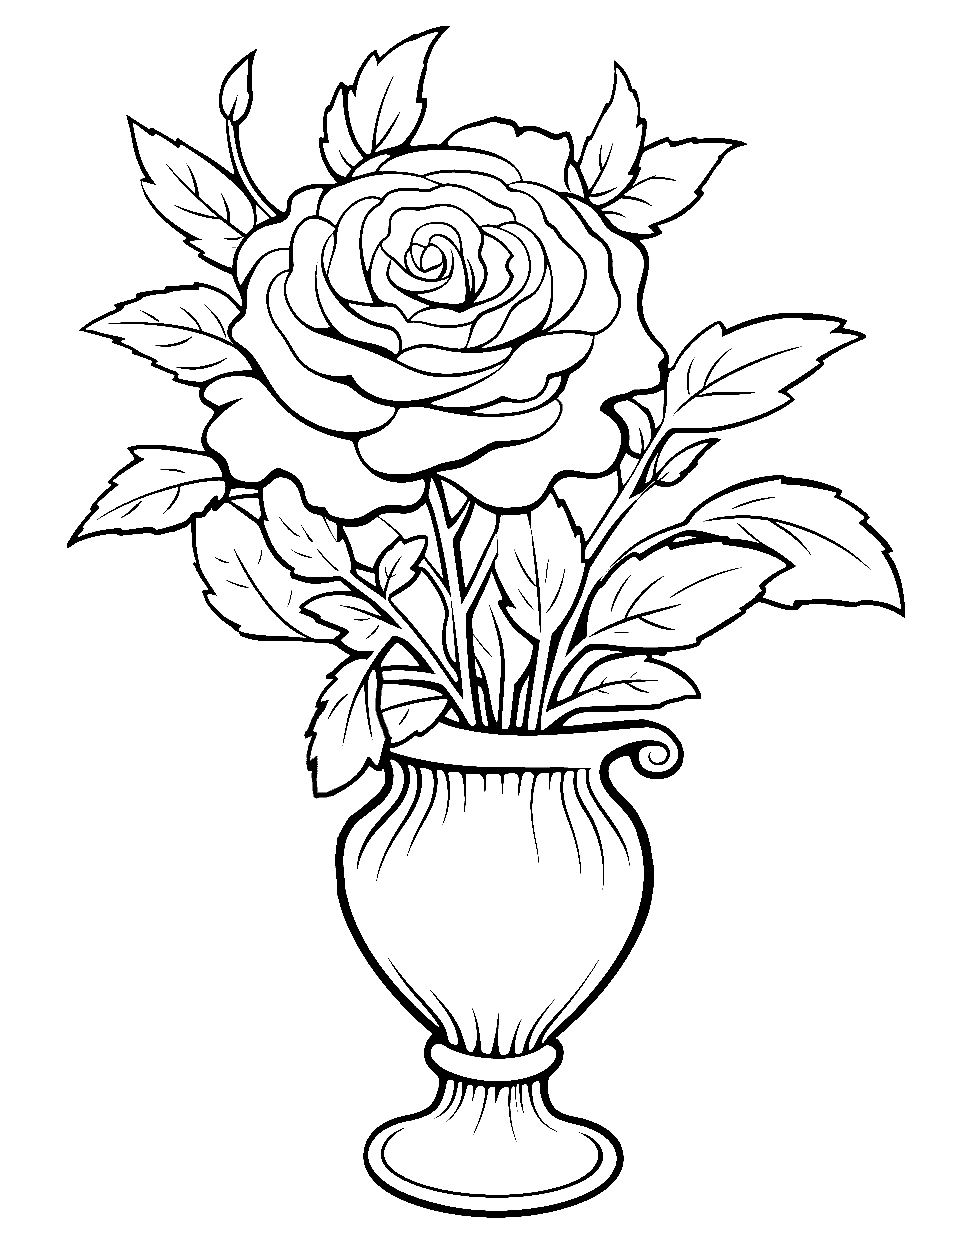 Roses Flowerpot Isolated On White Background Stock Vector (Royalty Free)  1648728274 | Shutterstock